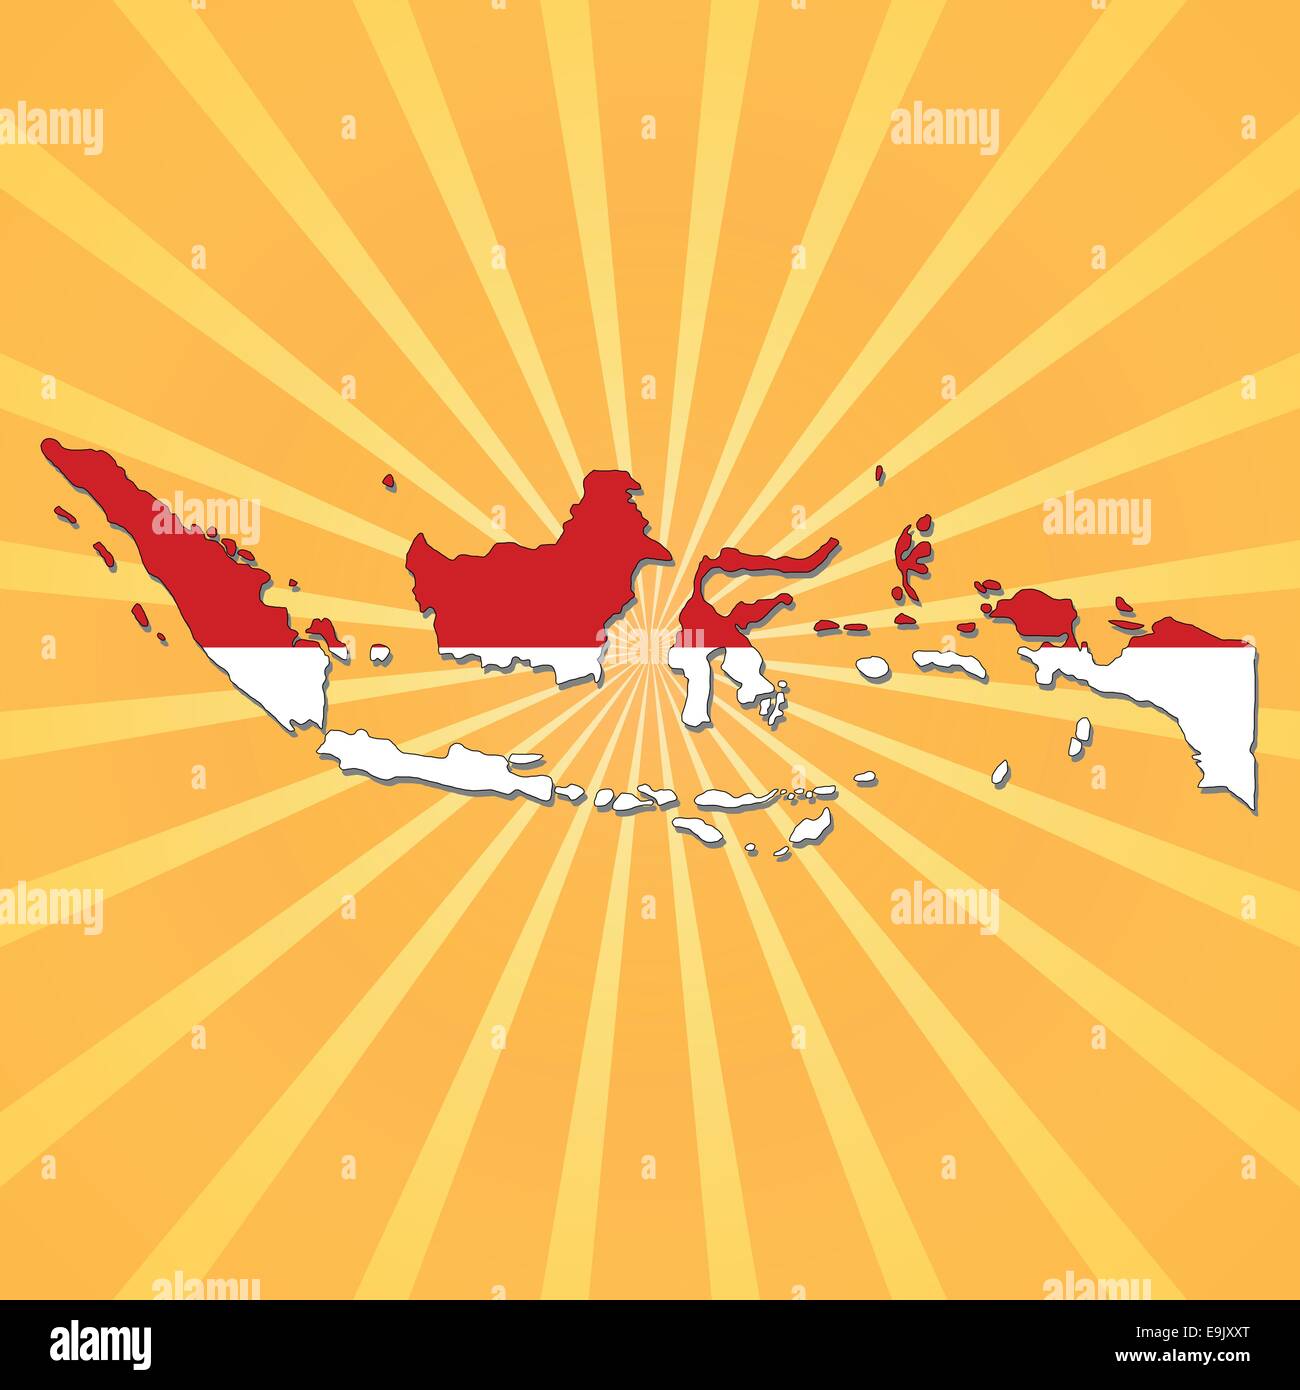 Indonesia map flag on sunburst illustration Stock Vector